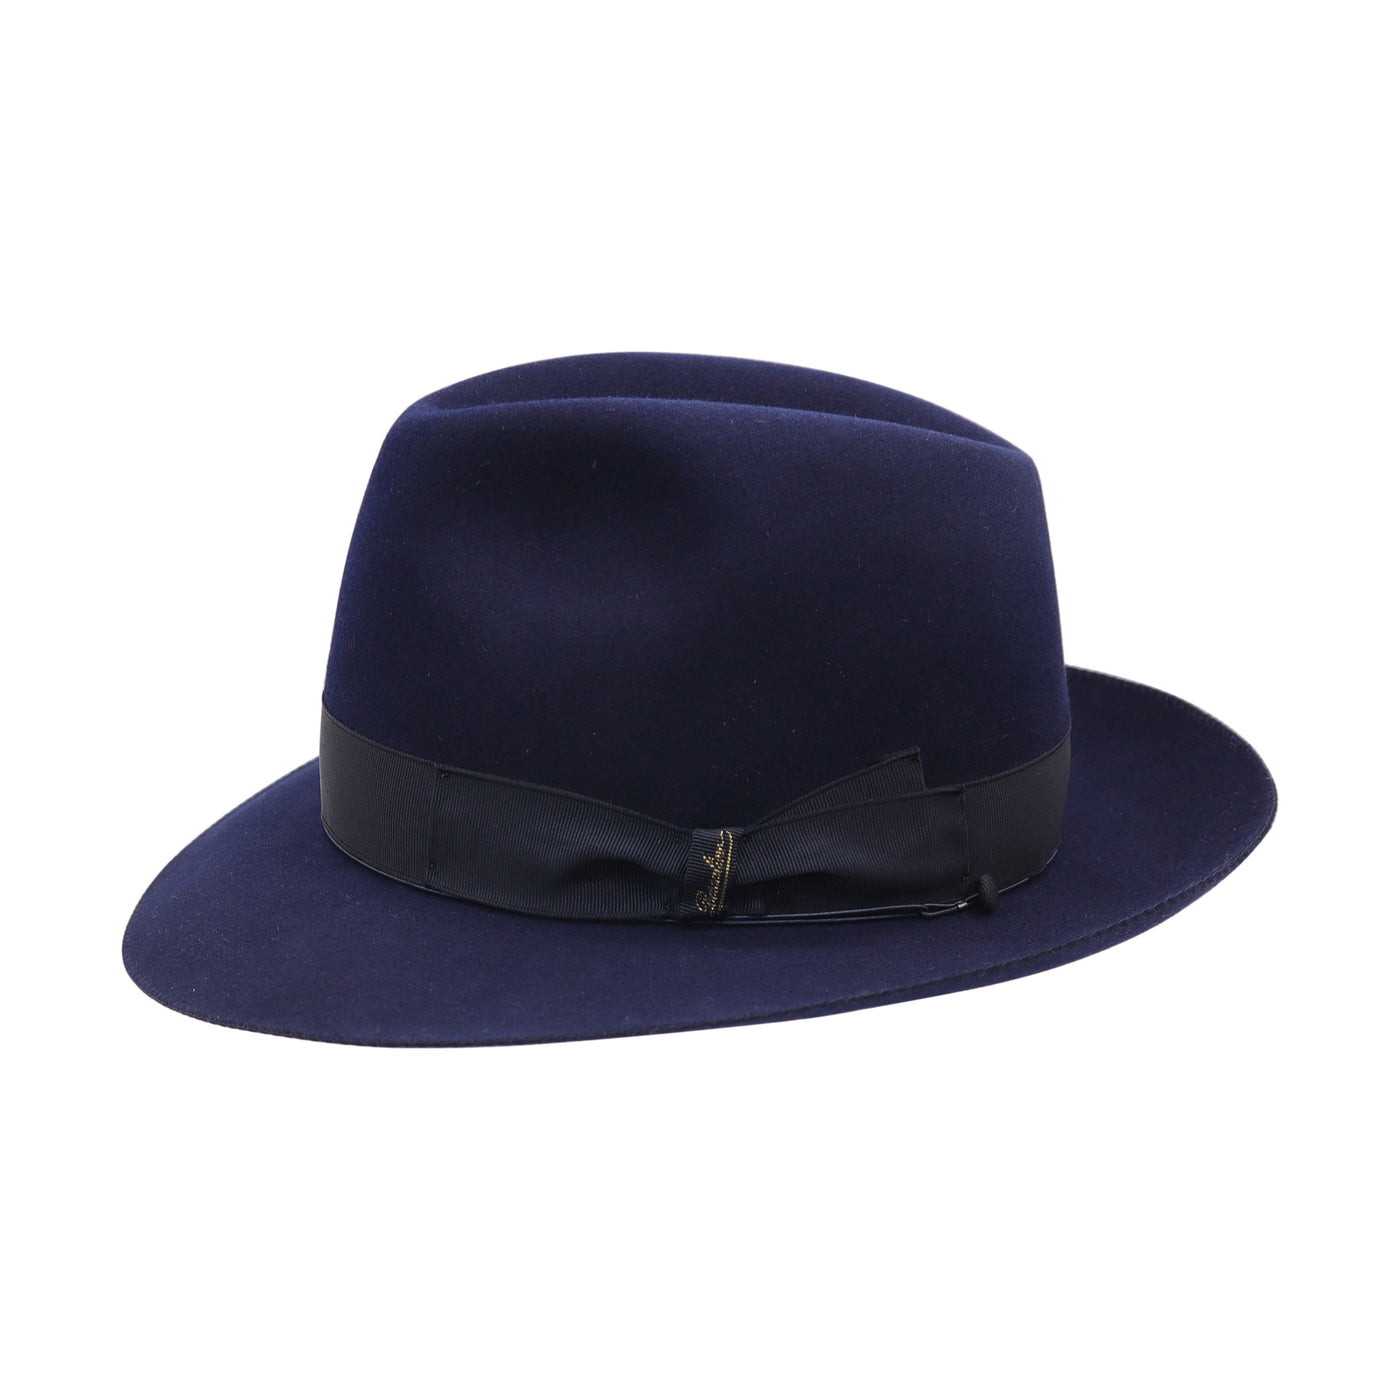 Astuccio 238 - Navy, product_type] - Borsalino for Atica fedora hat